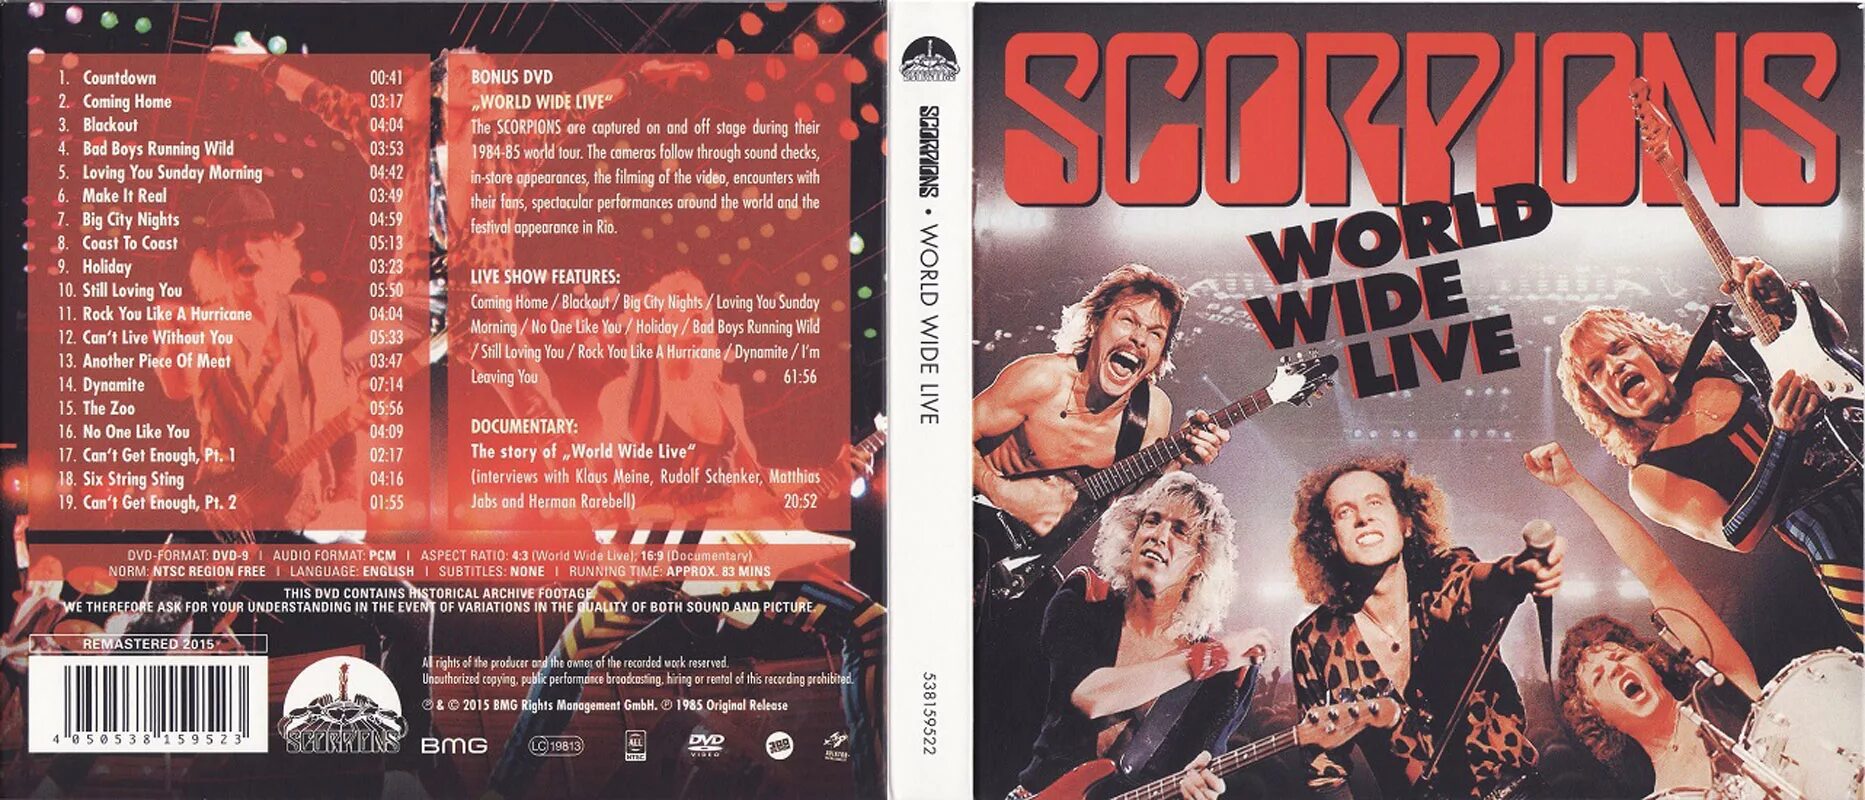 Группа Scorpions 1985. Scorpions World wide Live 1985. Scorpions World wide Live 1985 обложка. Scorpions 1984.